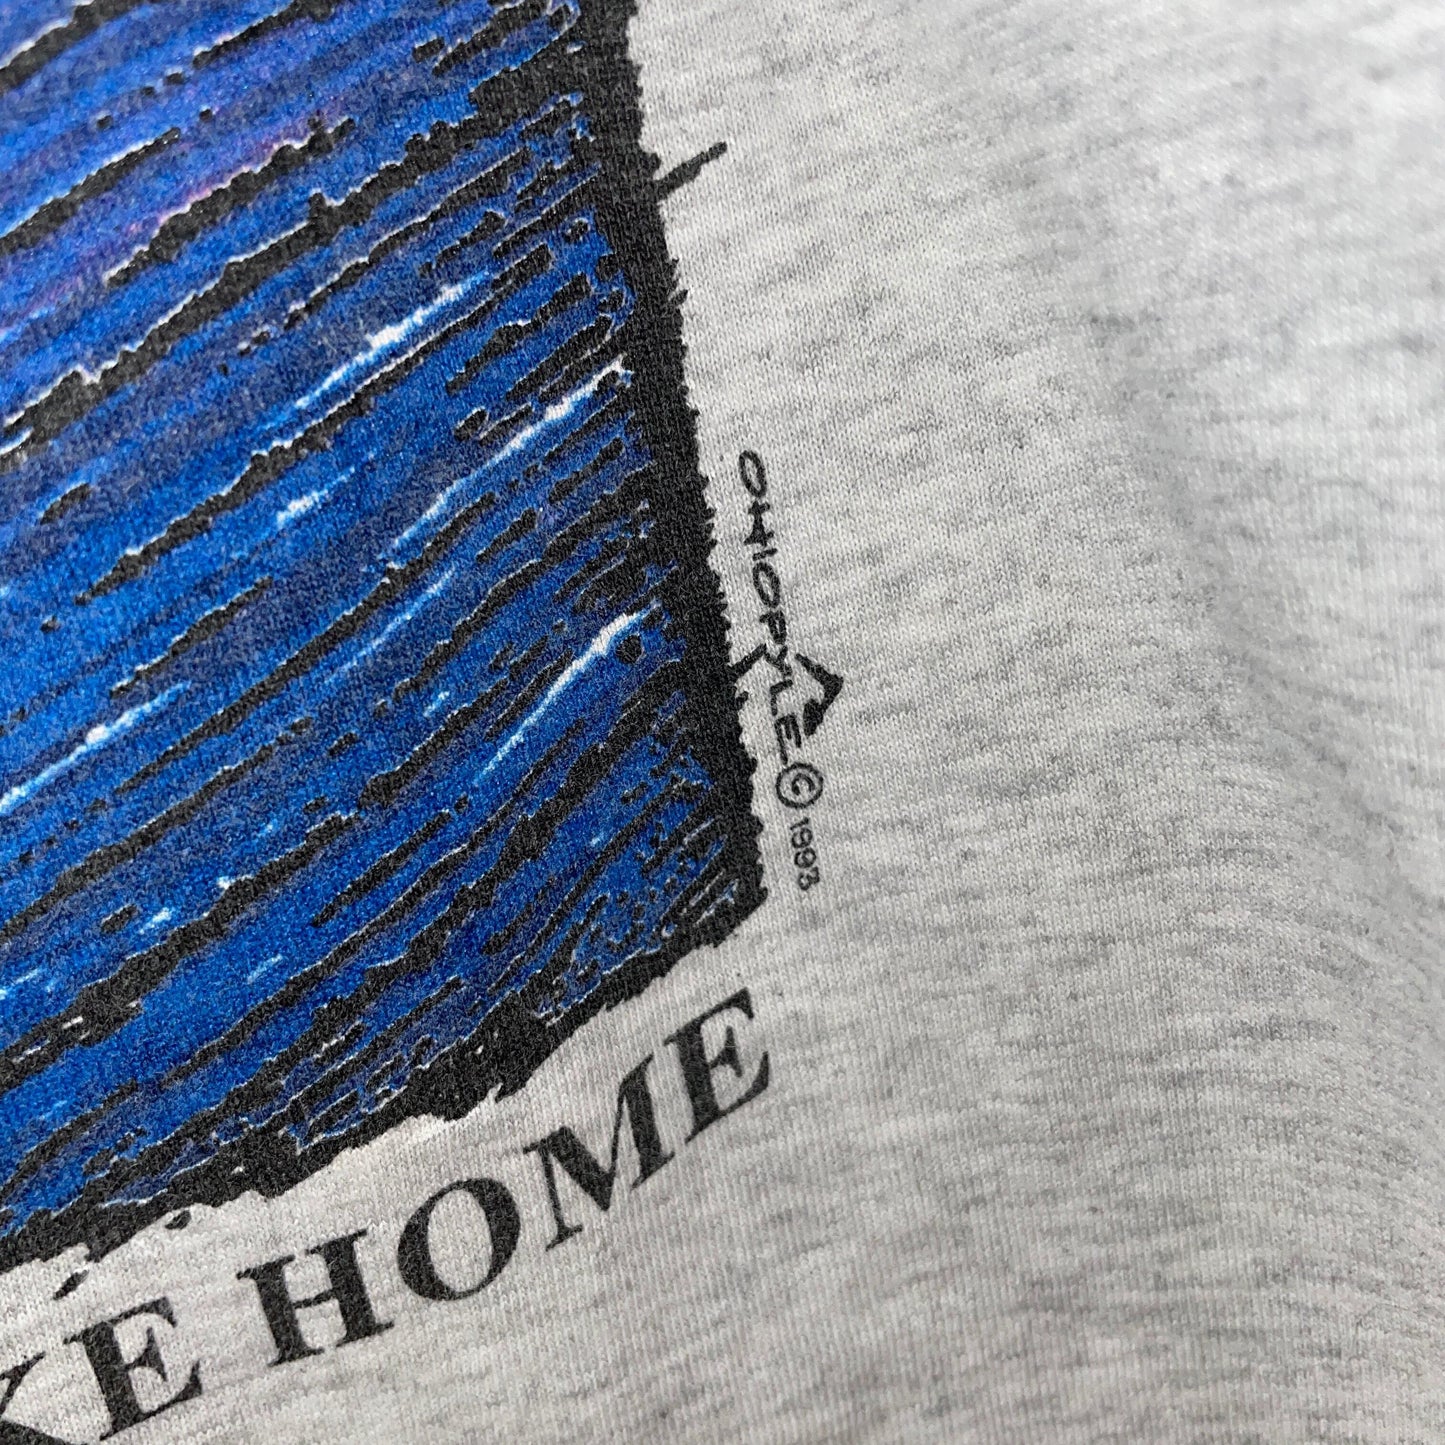 90's Vintage Tee T-shirt single stitch